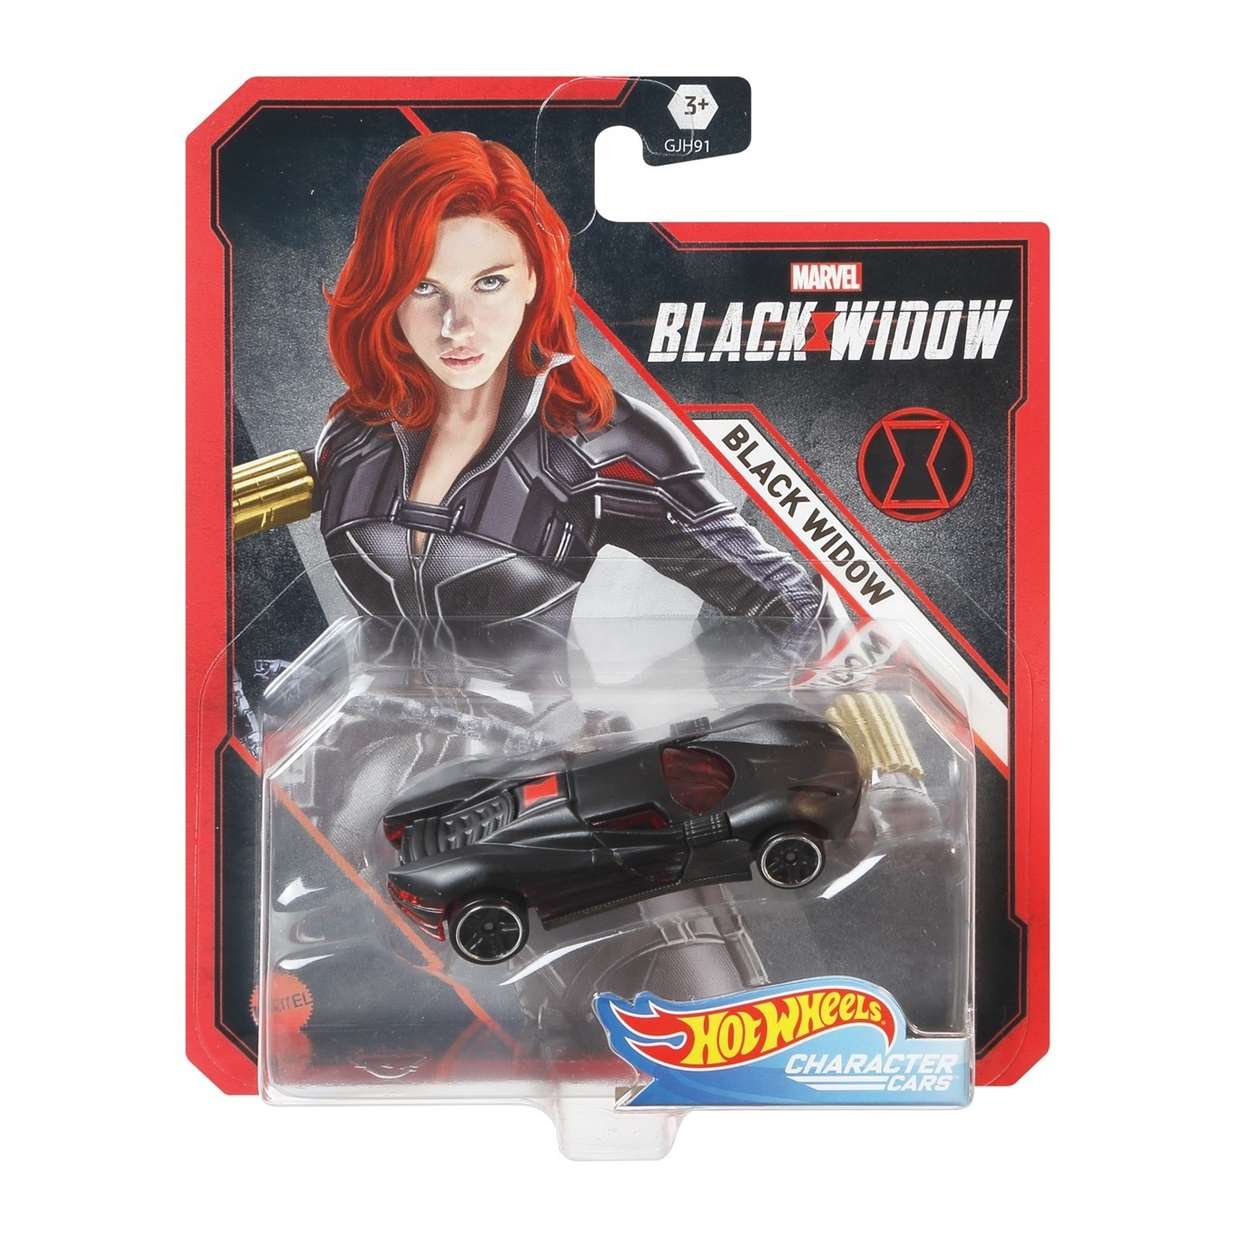 Black Widow Gjh91 Hot Wheels Marvel Character Cars